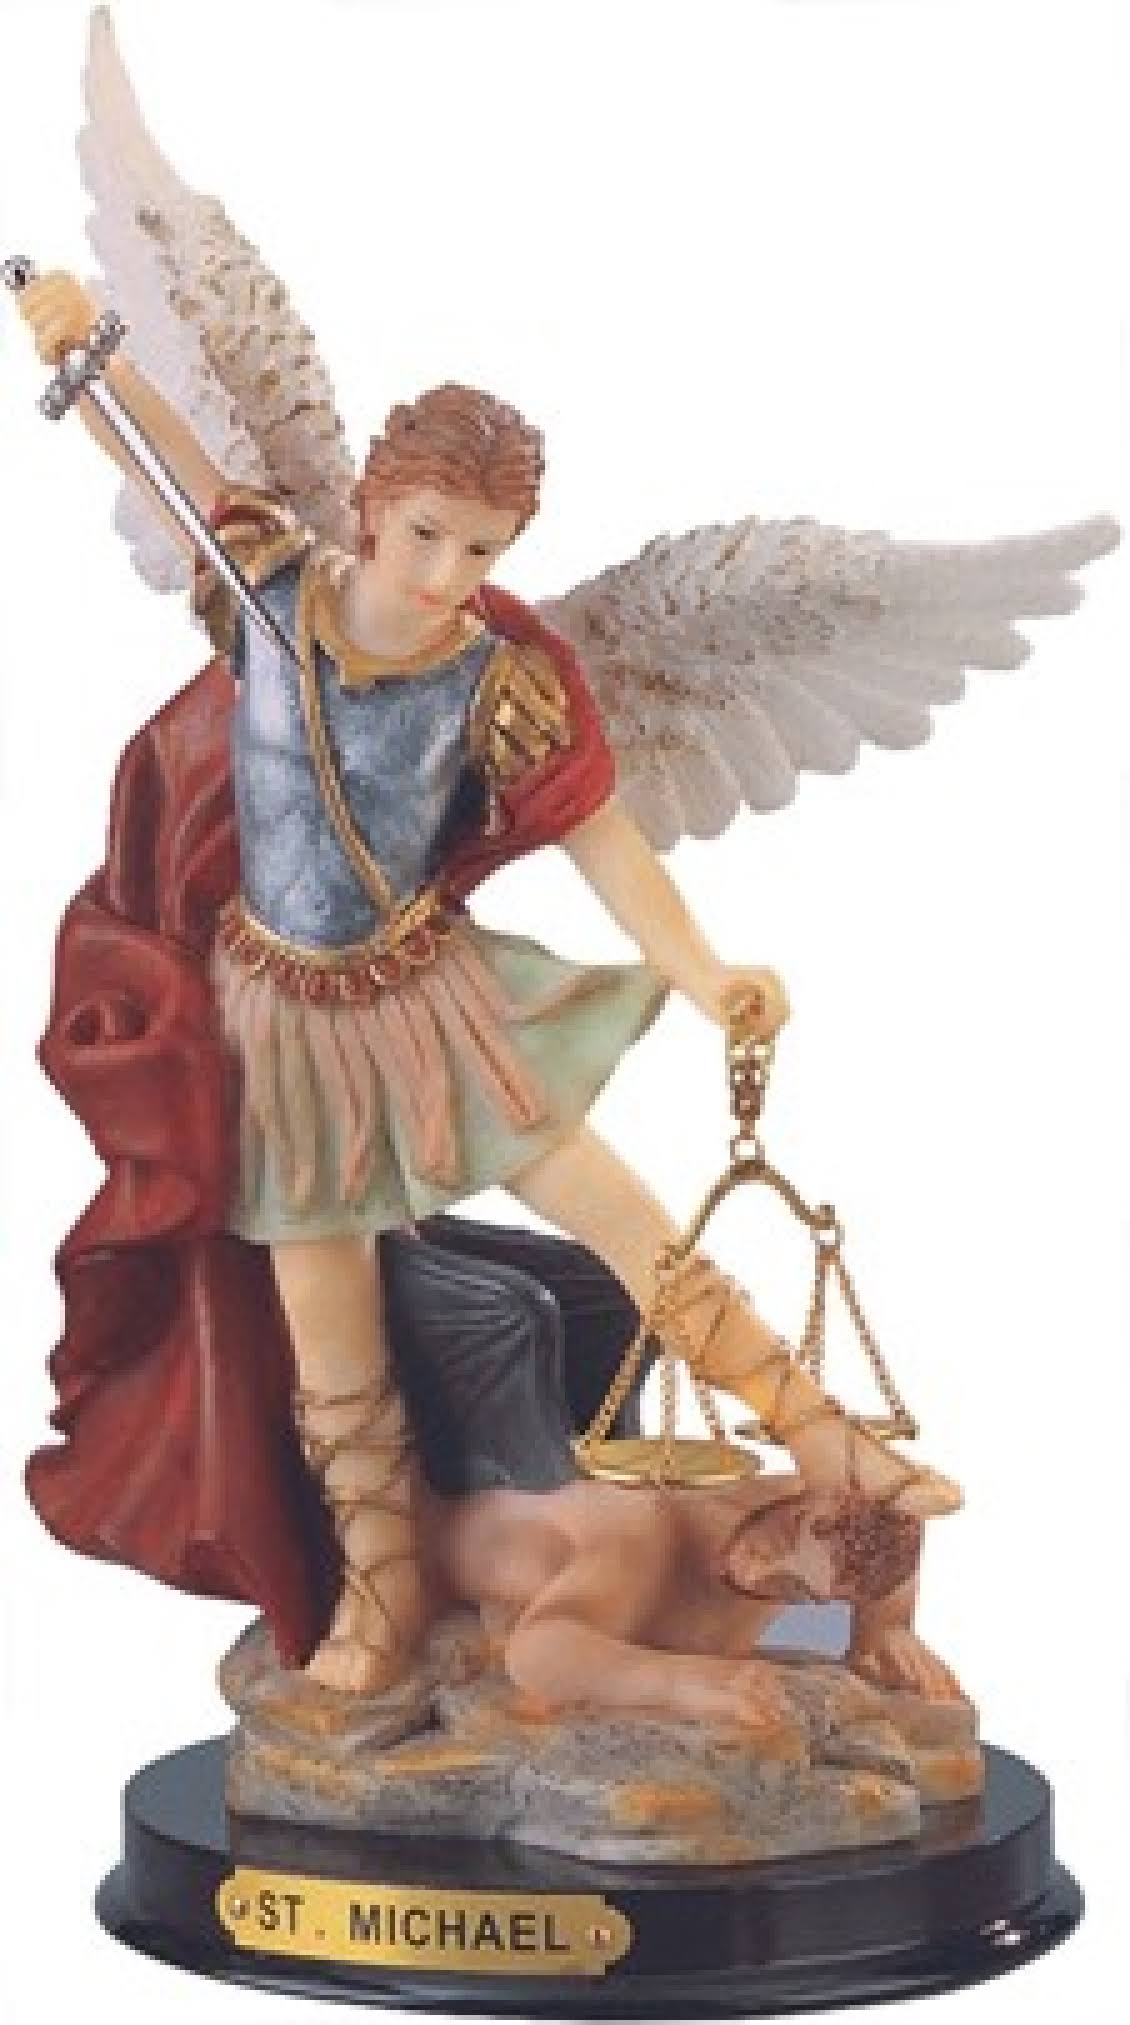 StealStreet SS-G-309.04 Saint Michael The Archangel Holy Figurine Religious Decoration, 9"